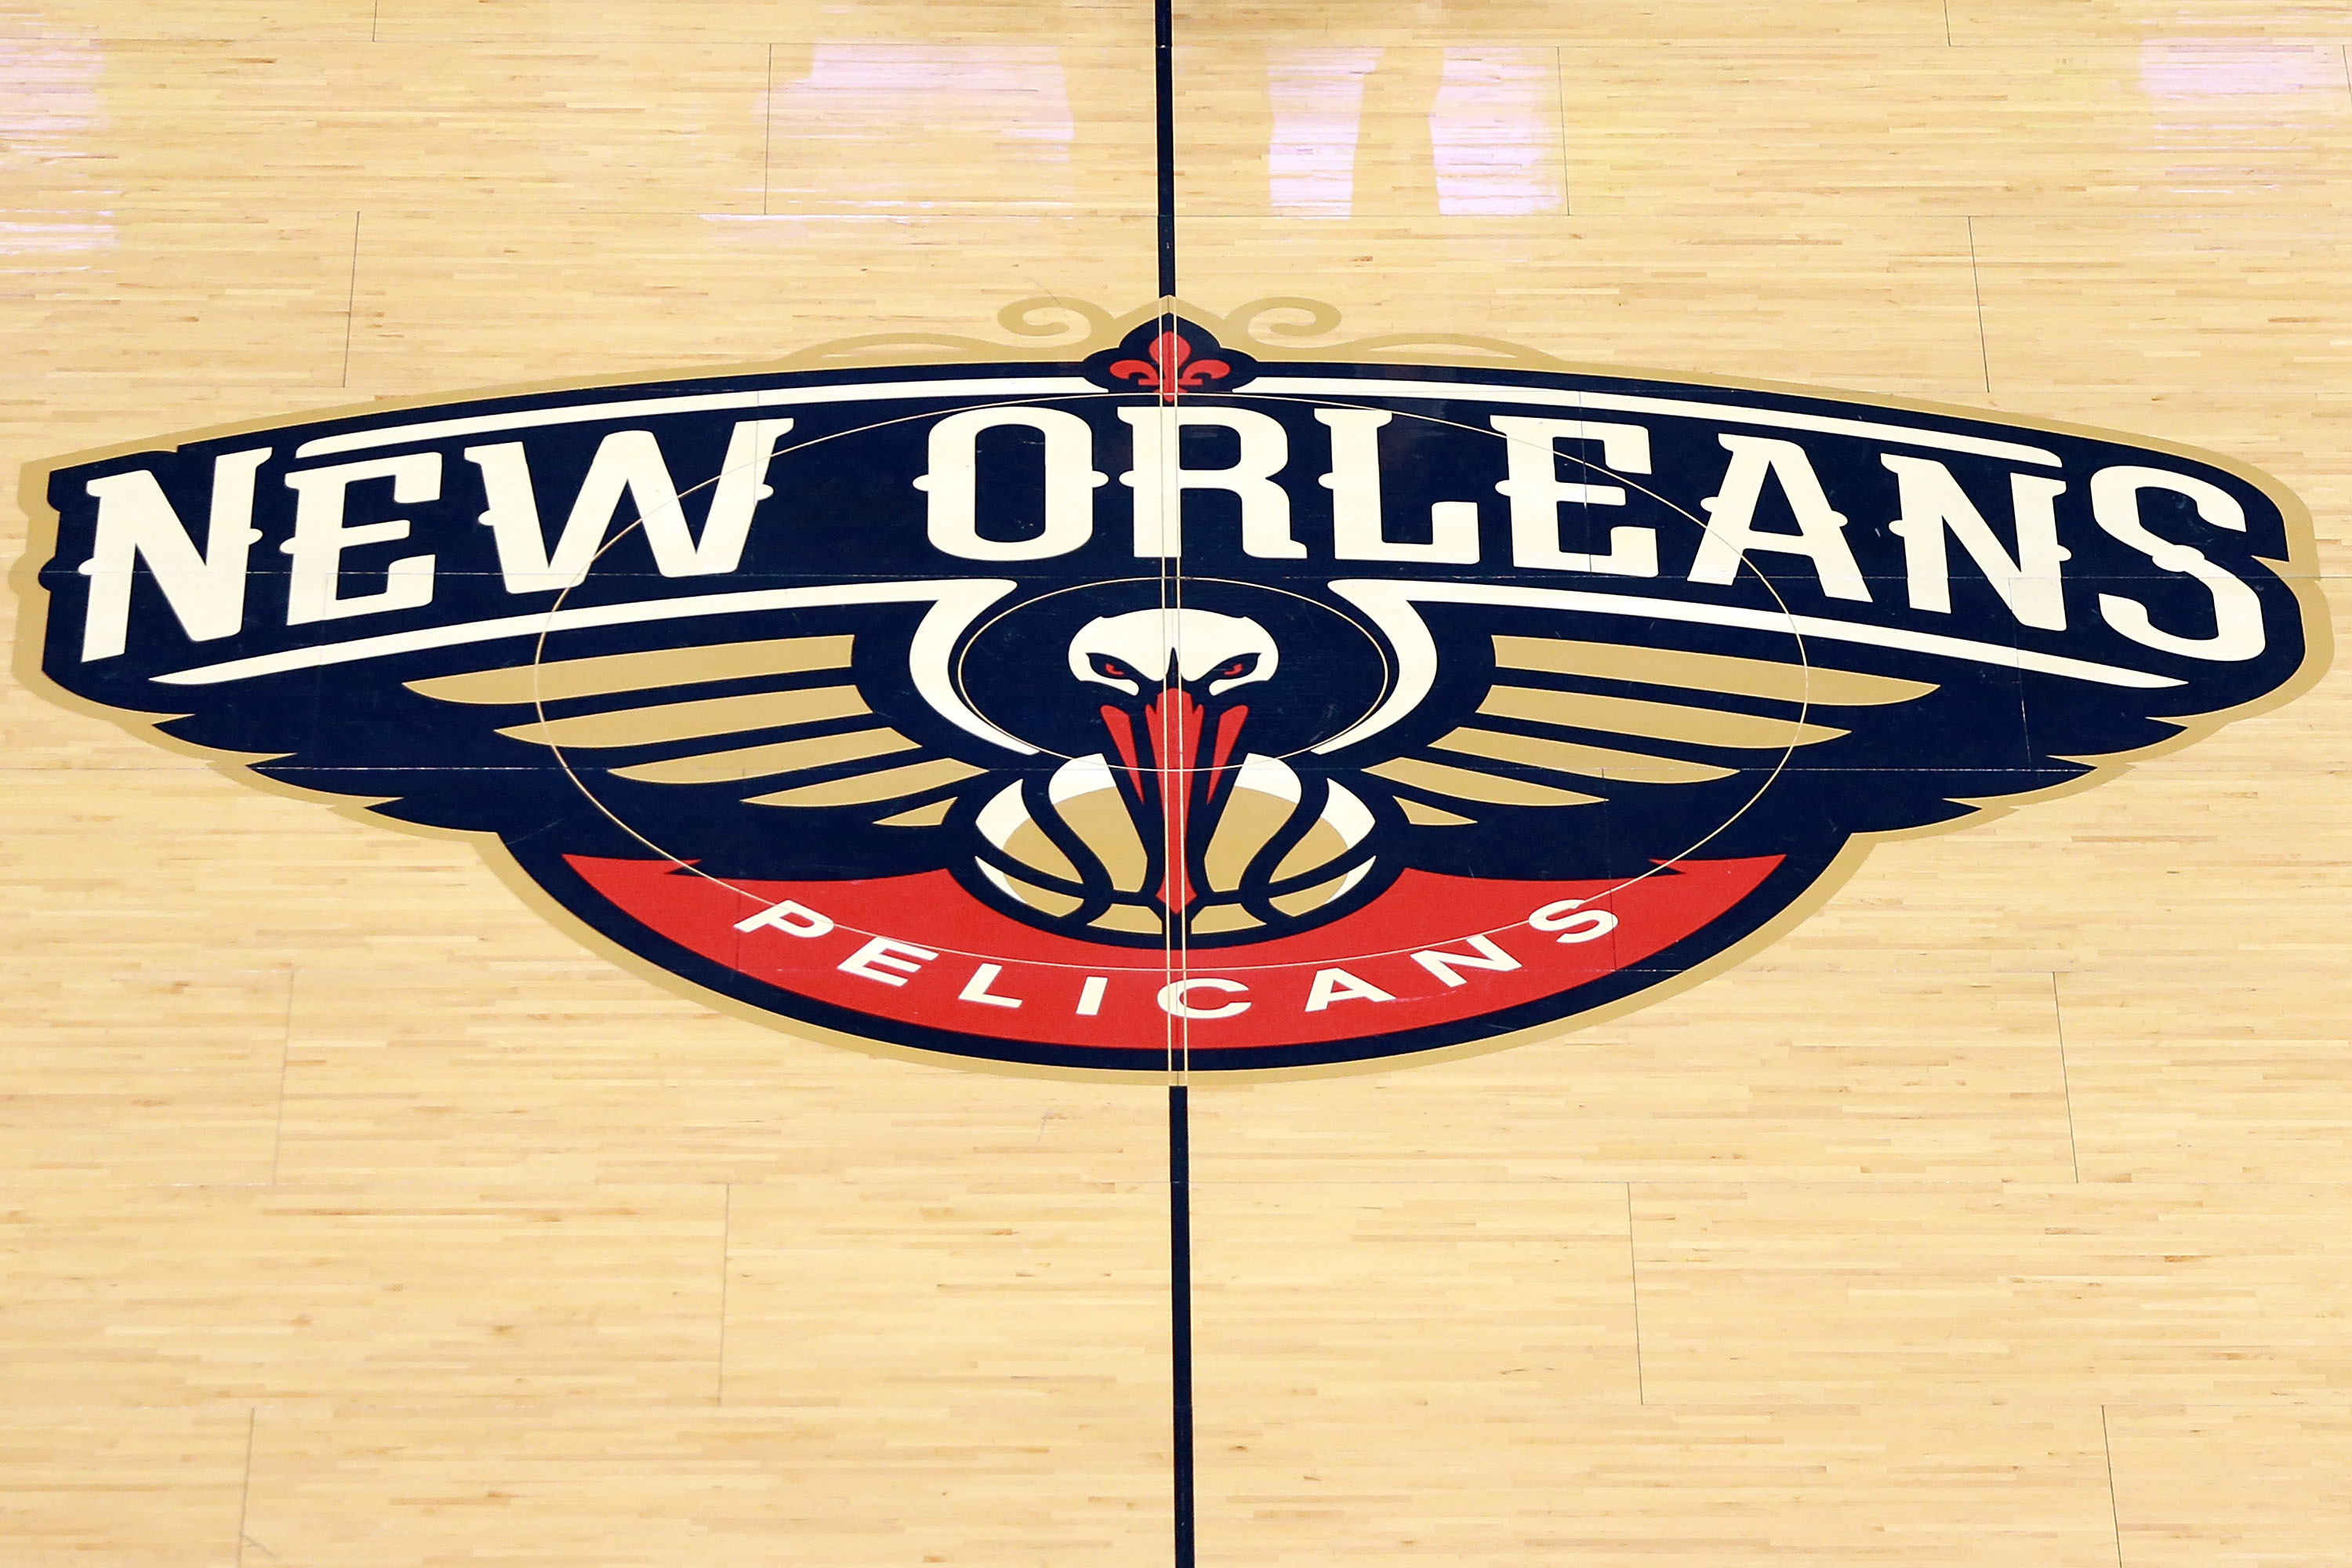 New Orleans Pelicans' G League affiliate in Birmingham now has a